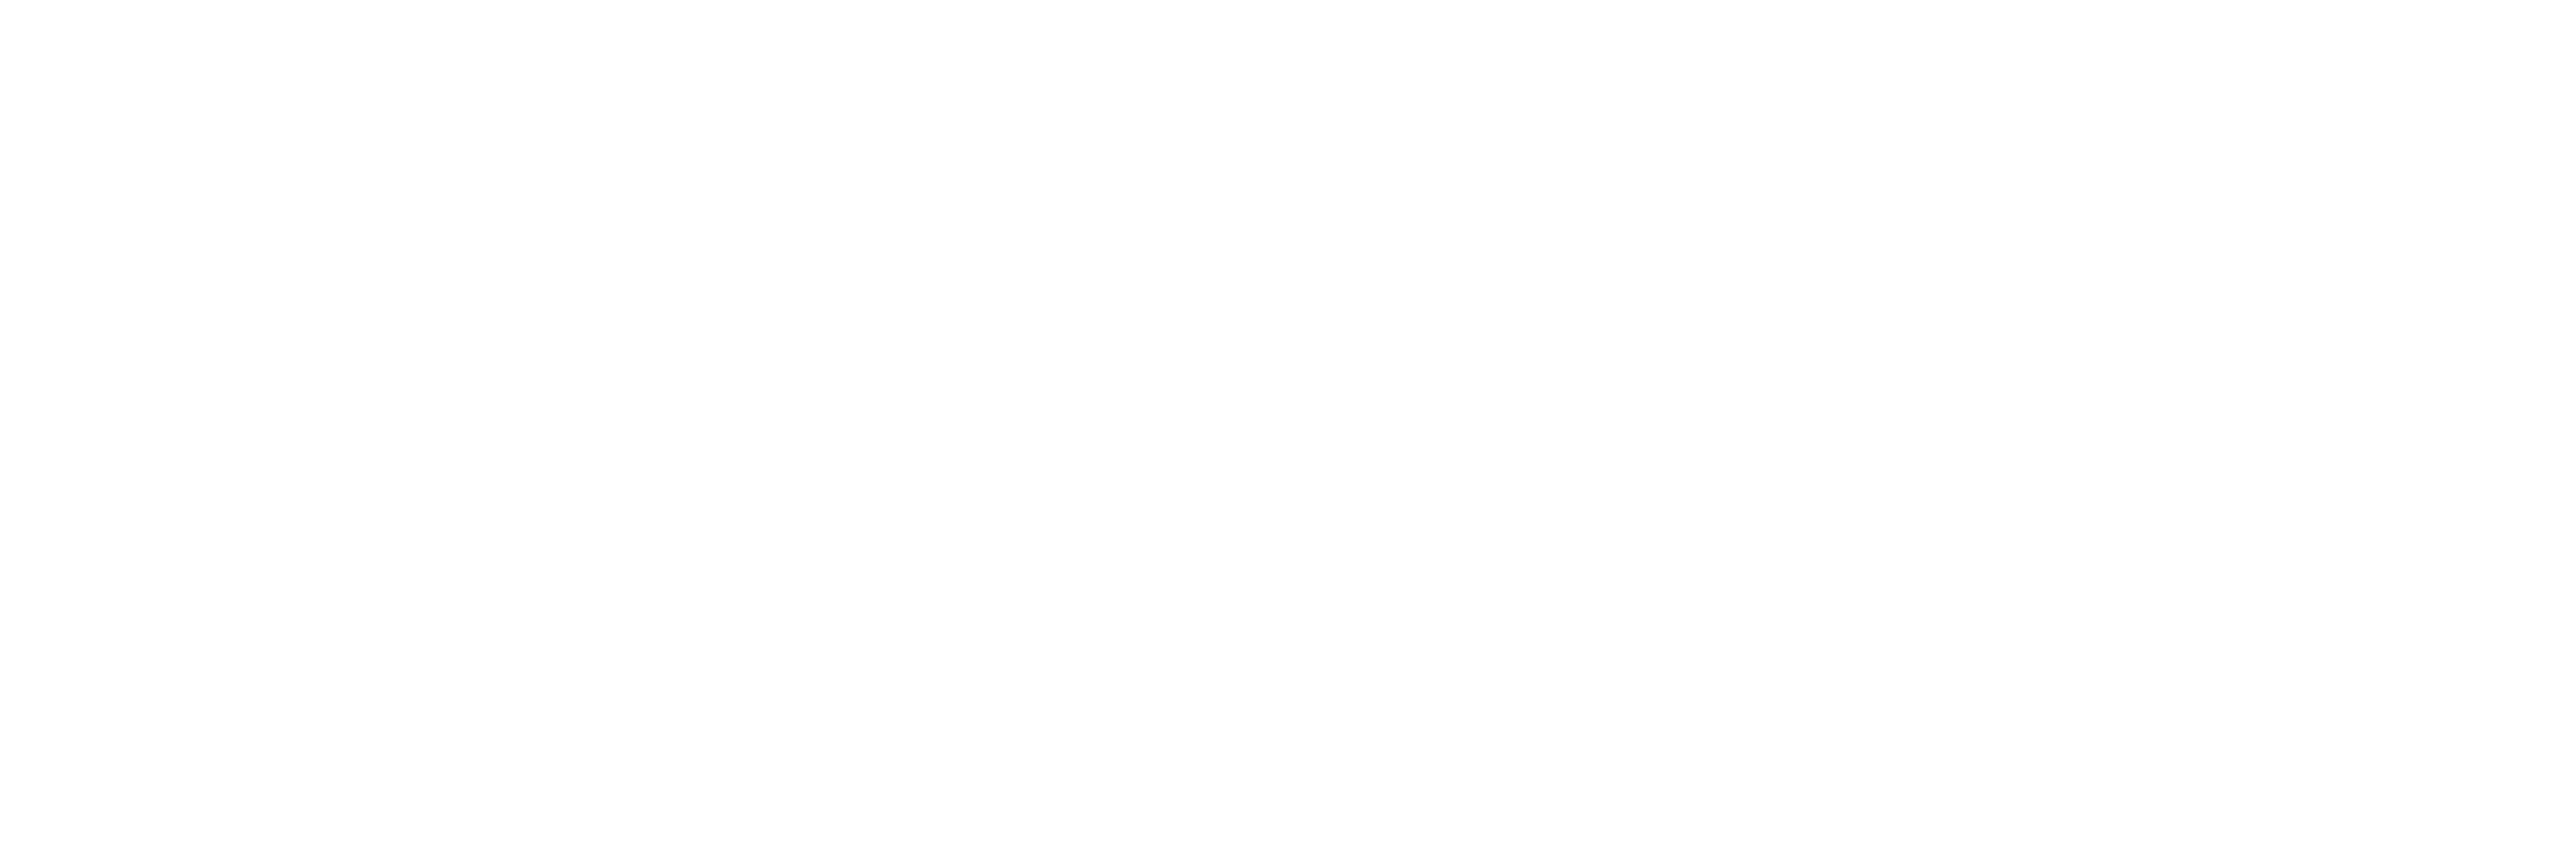 VU TechHub